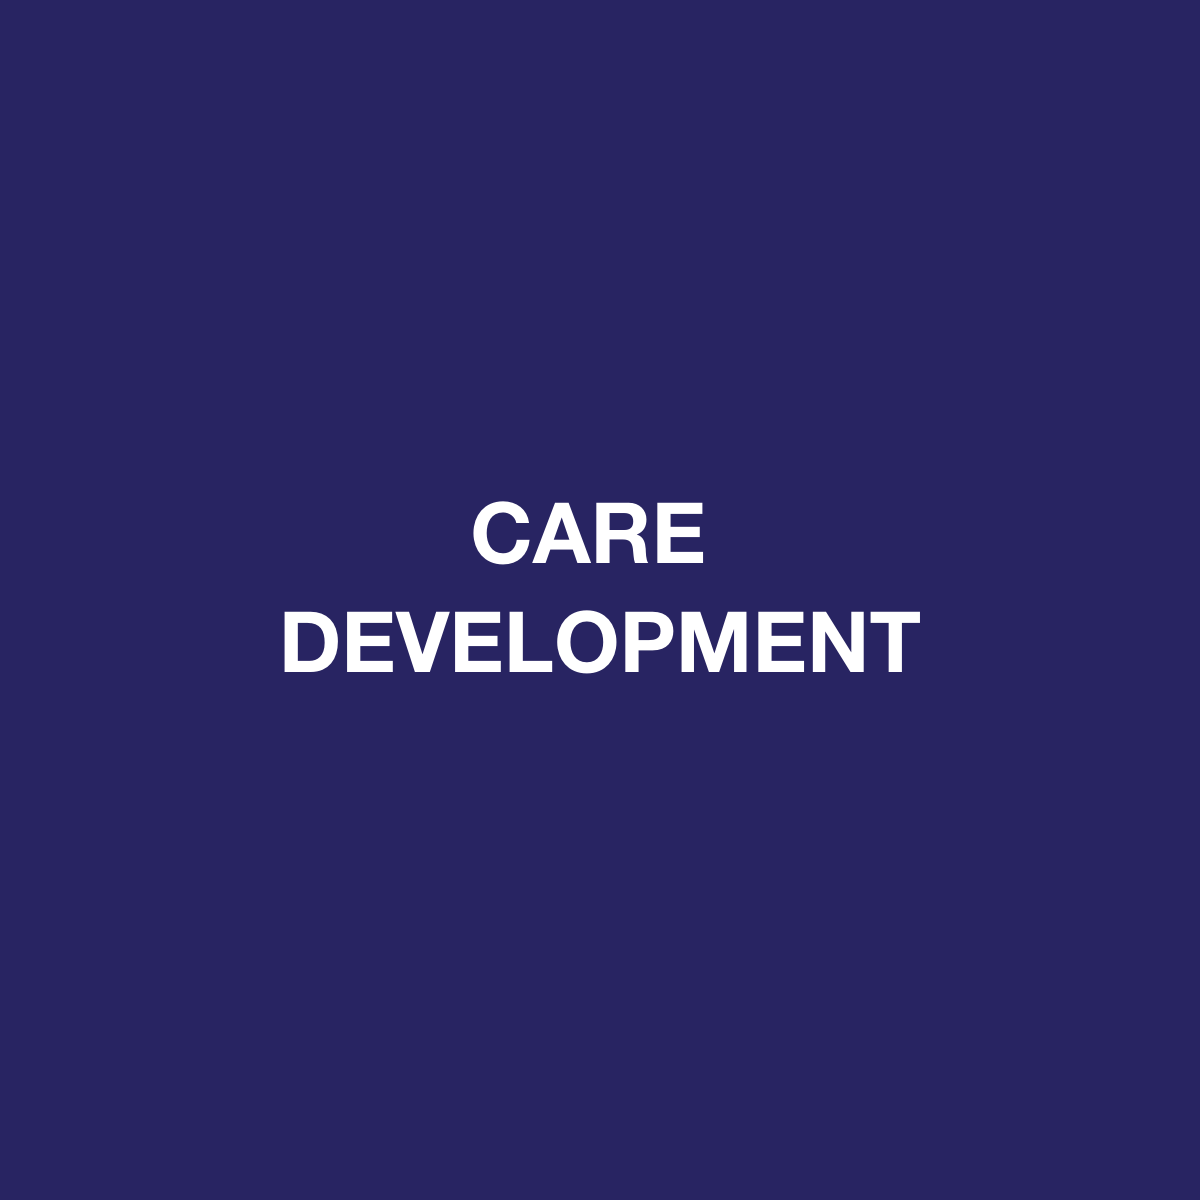 Care Development